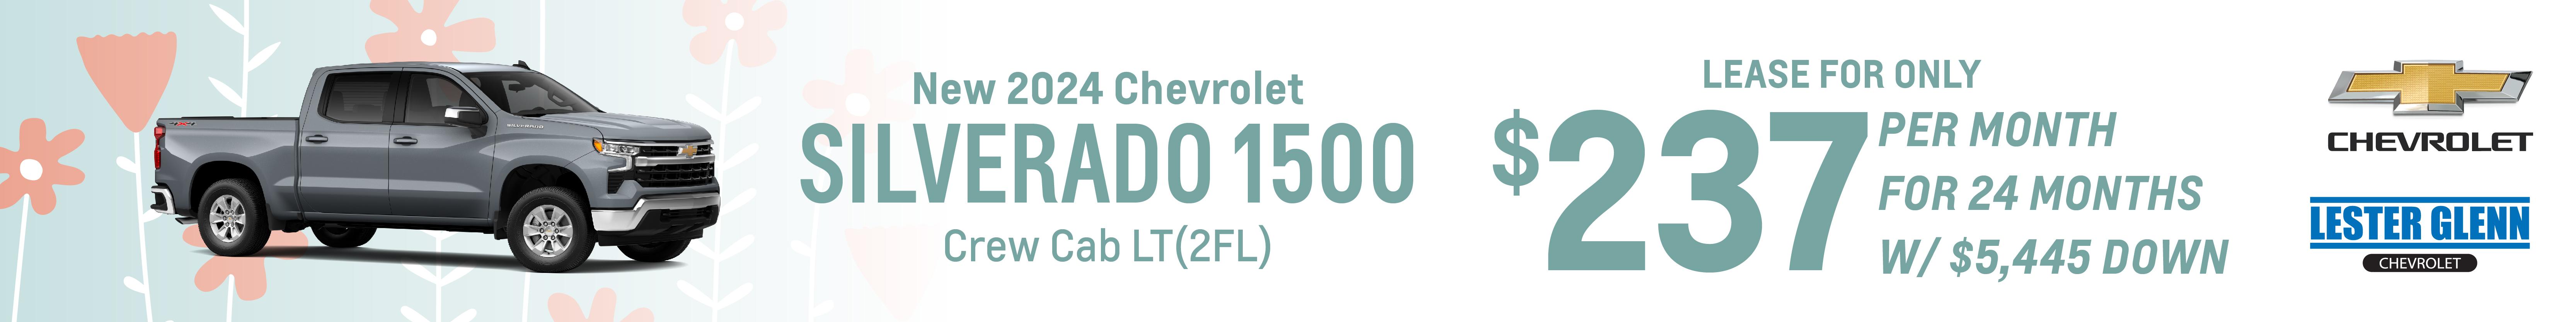 2024 Chevrolet Silverado 1500 Special Offer